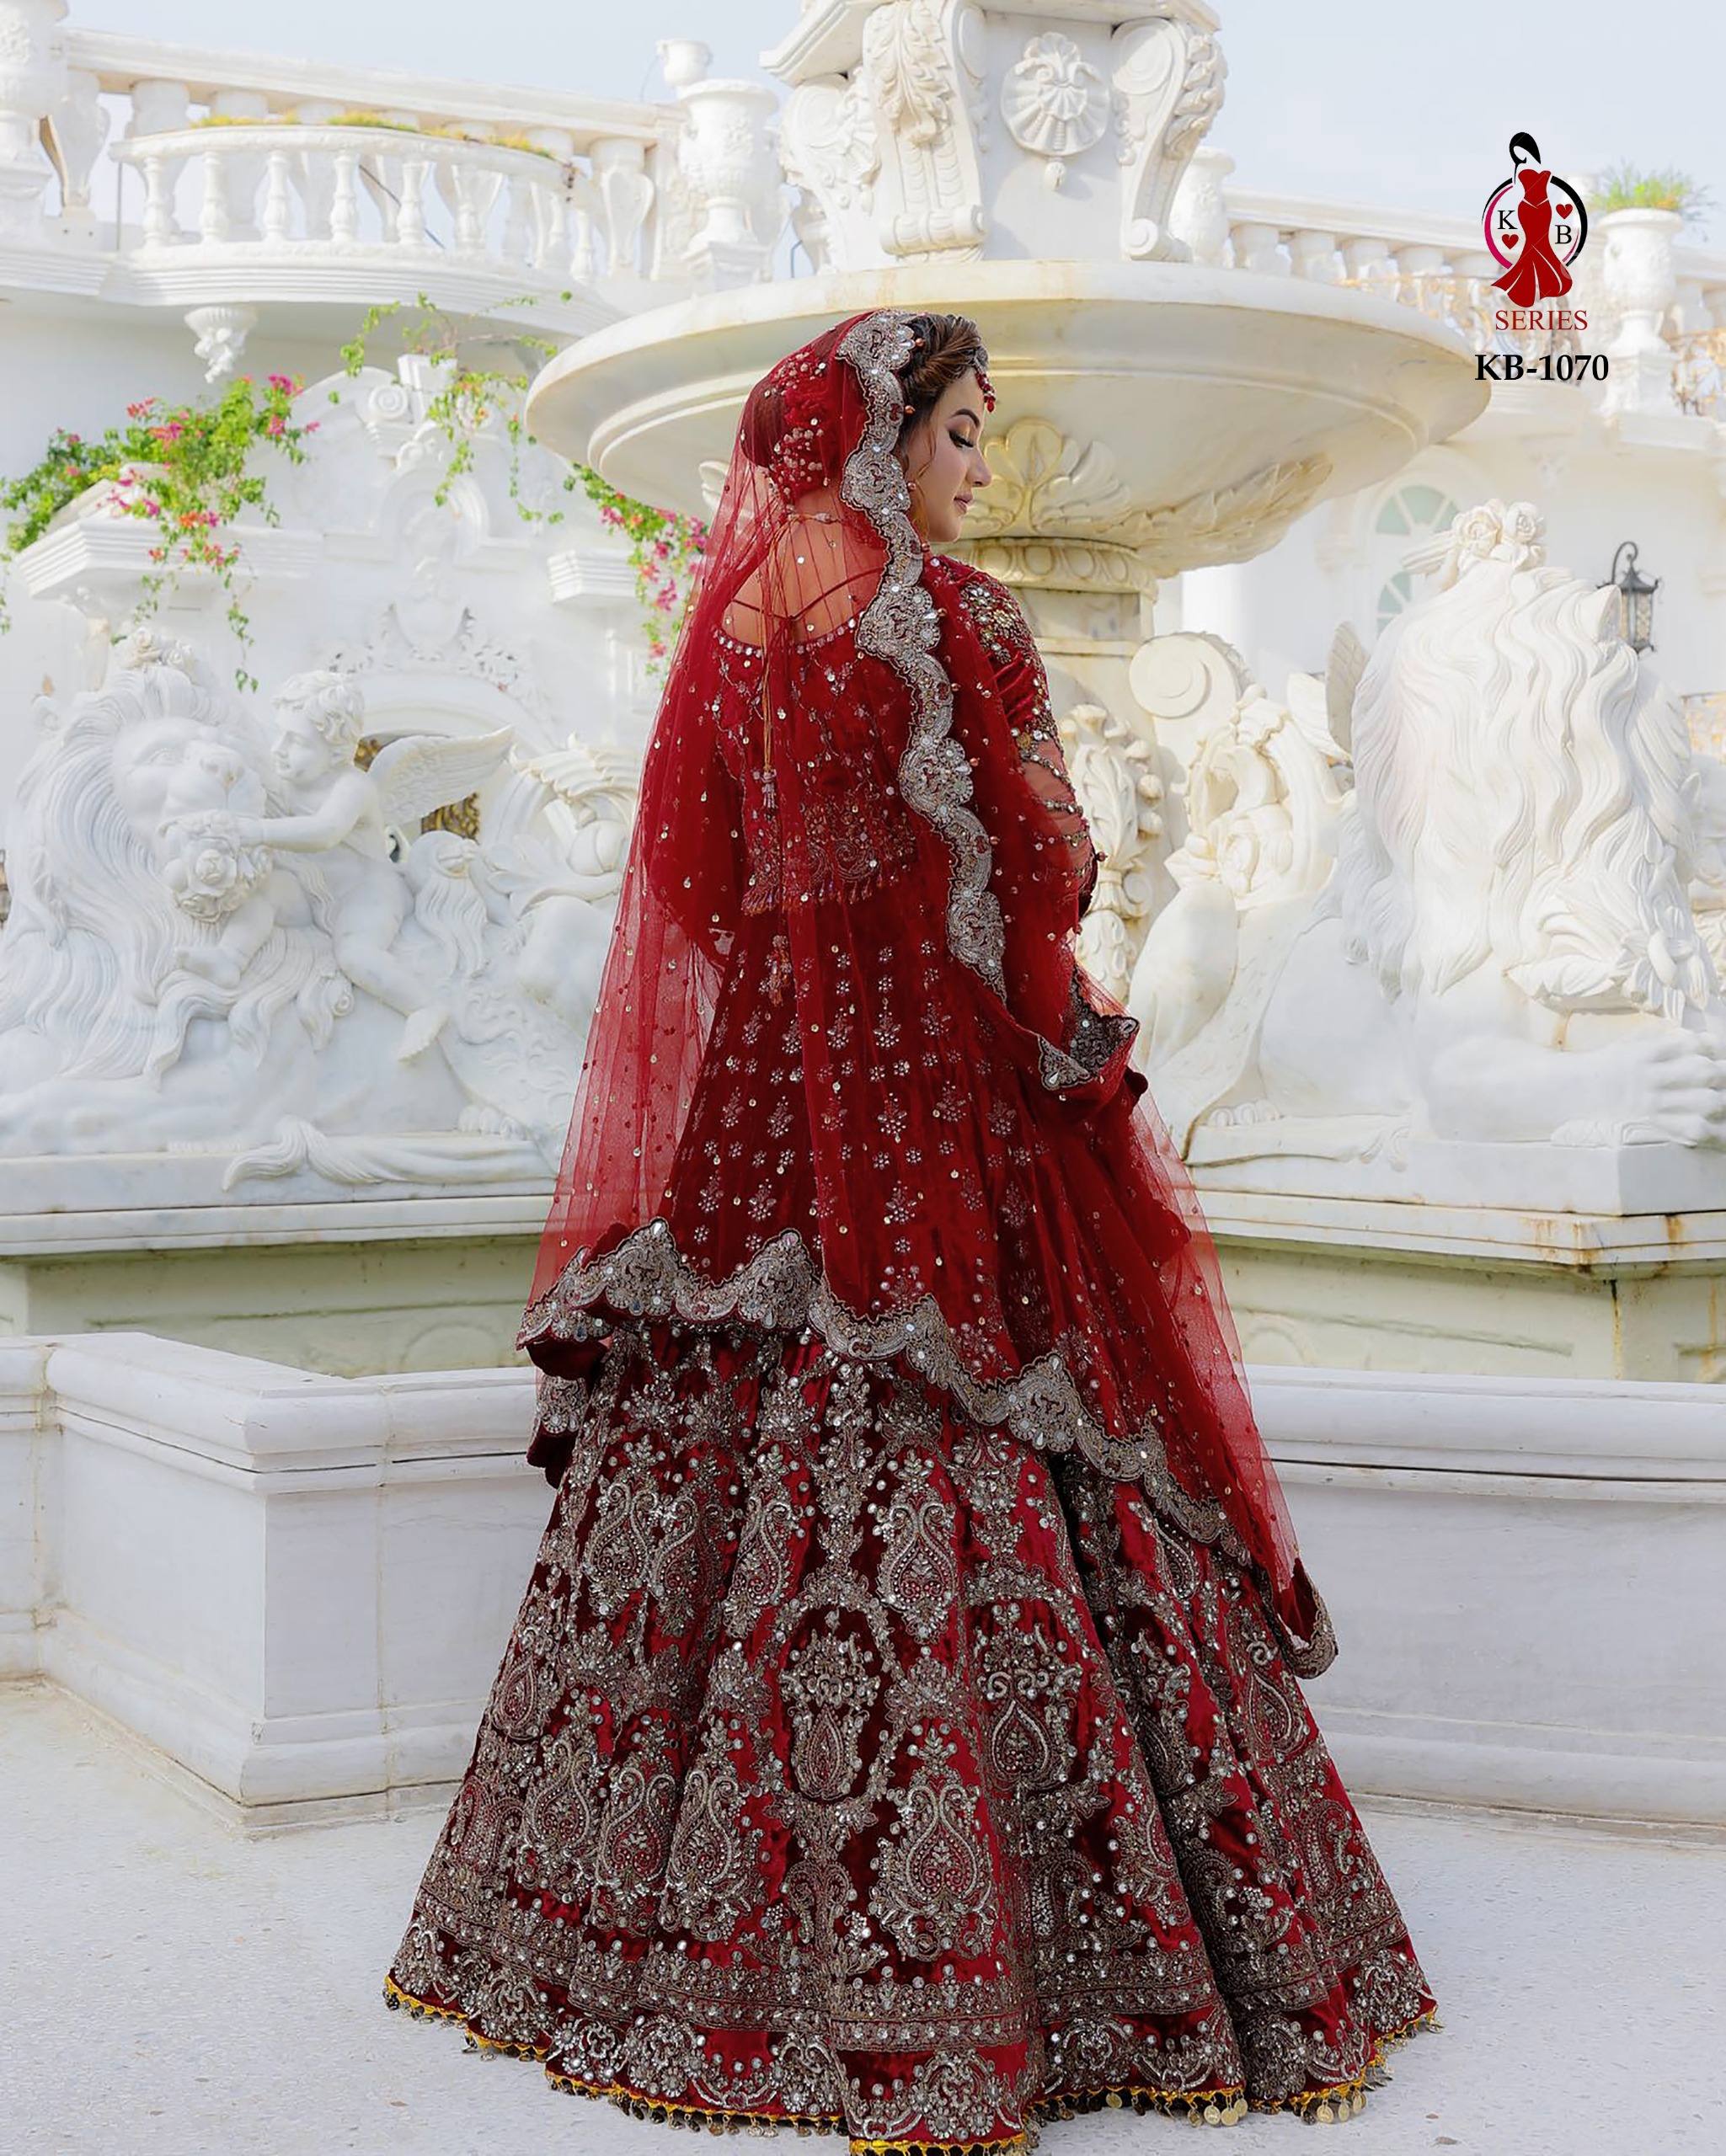 KB Series Boutique Collection Bridal Lehenga Choli KB-1070